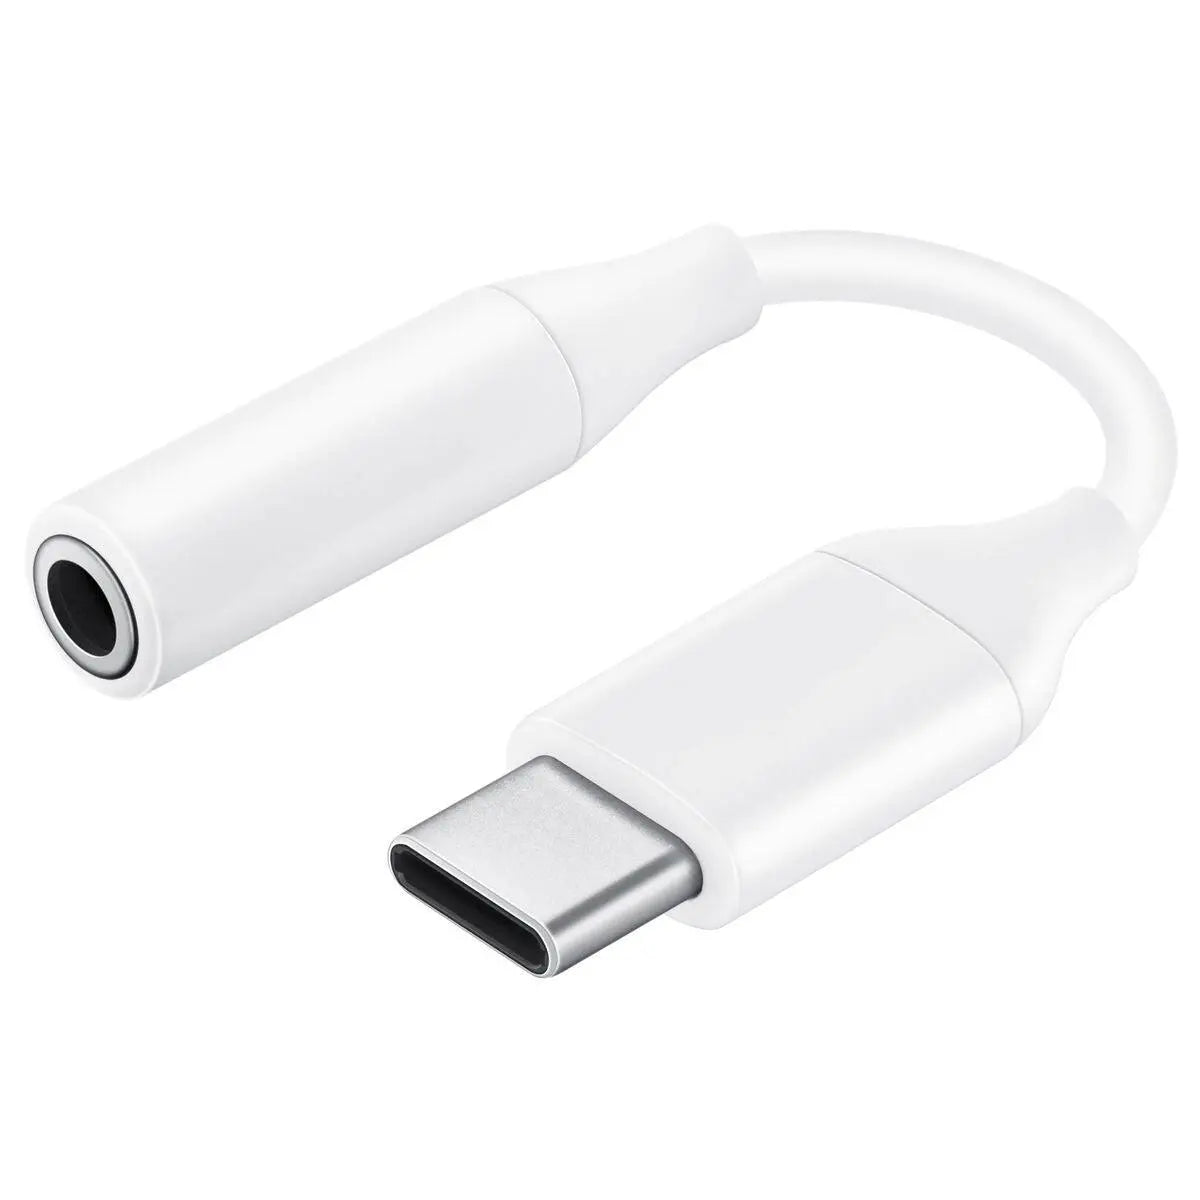 USB C to Jack 3.5 mm Adapter Samsung EE-UC10JUWE - IGSI Europe Ltd